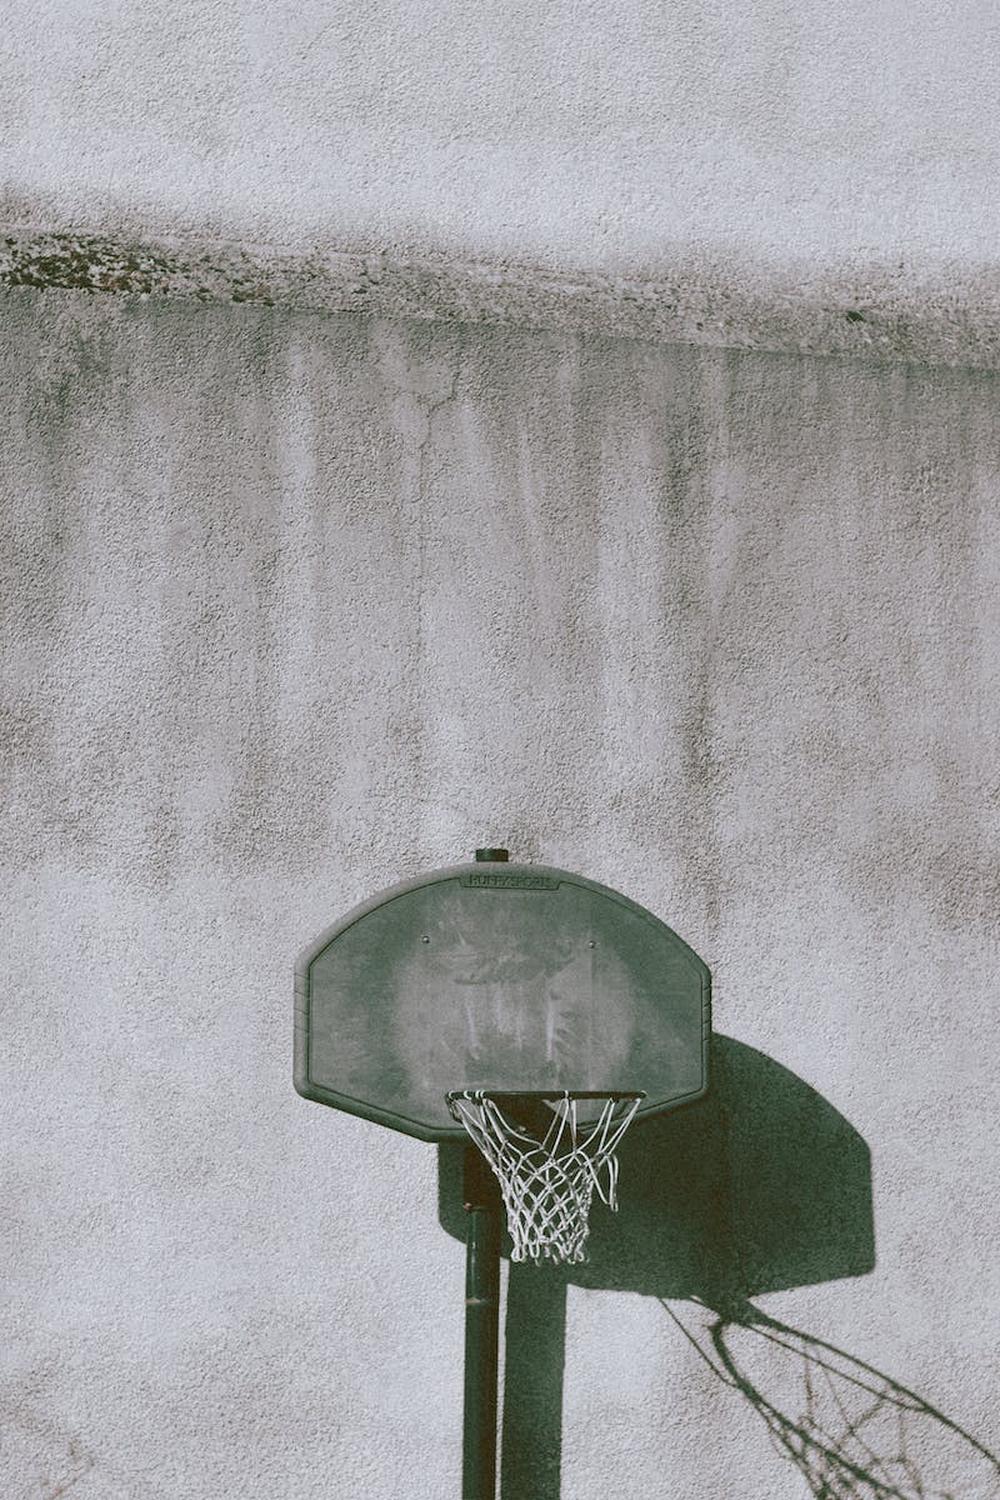 basketball_hoop_near_weathered_wall_on_sports_grou